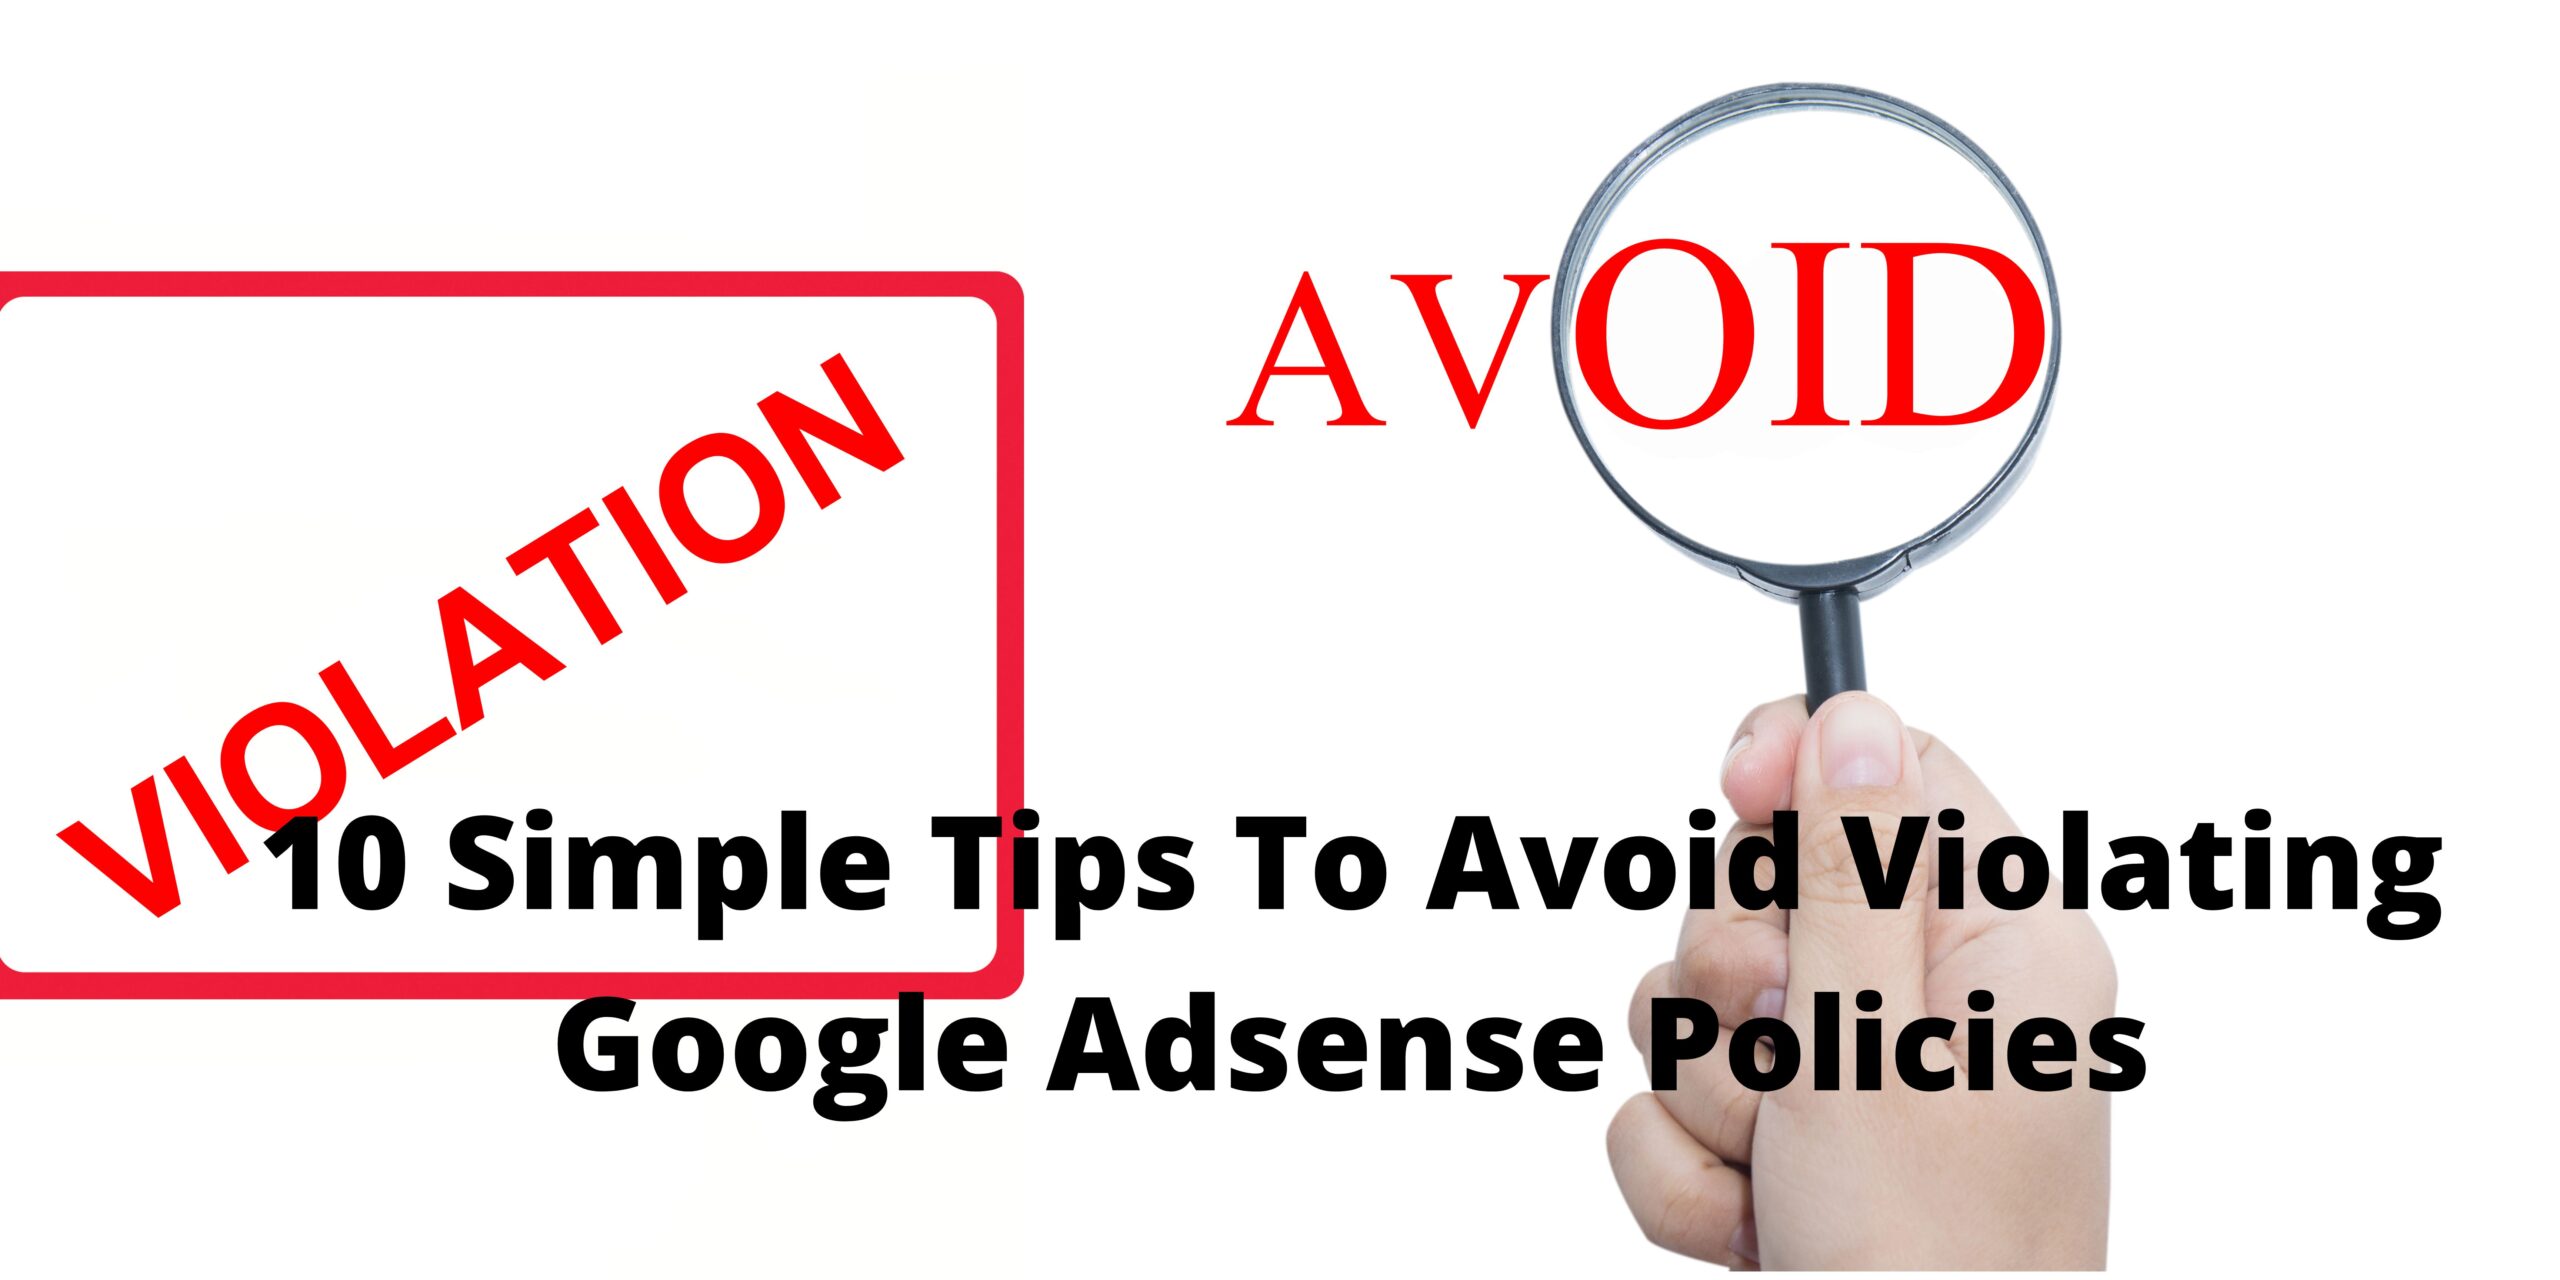 10 Simple Tips To Avoid Violating Google Adsense Policies